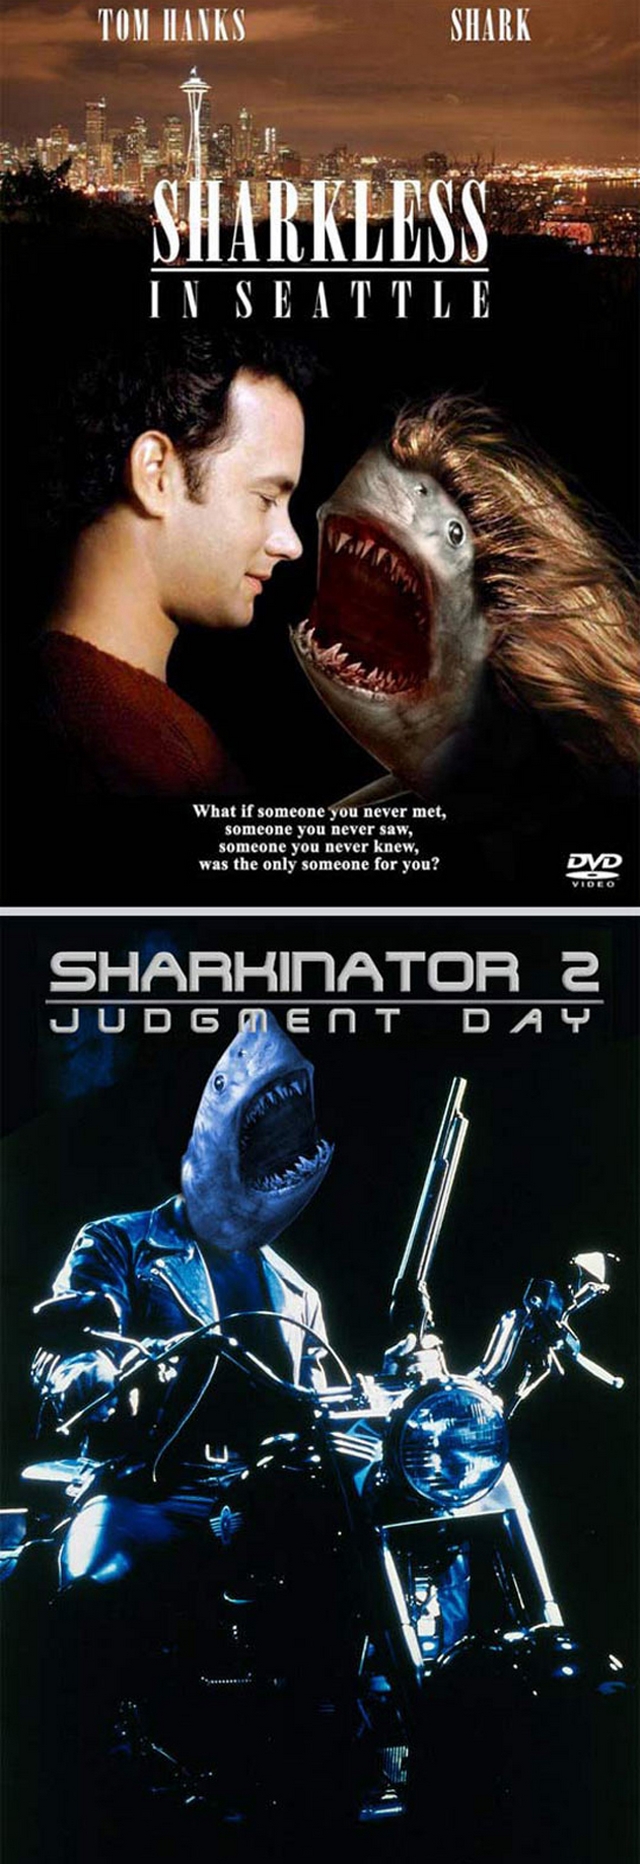 Sharks Make Movies More Fun